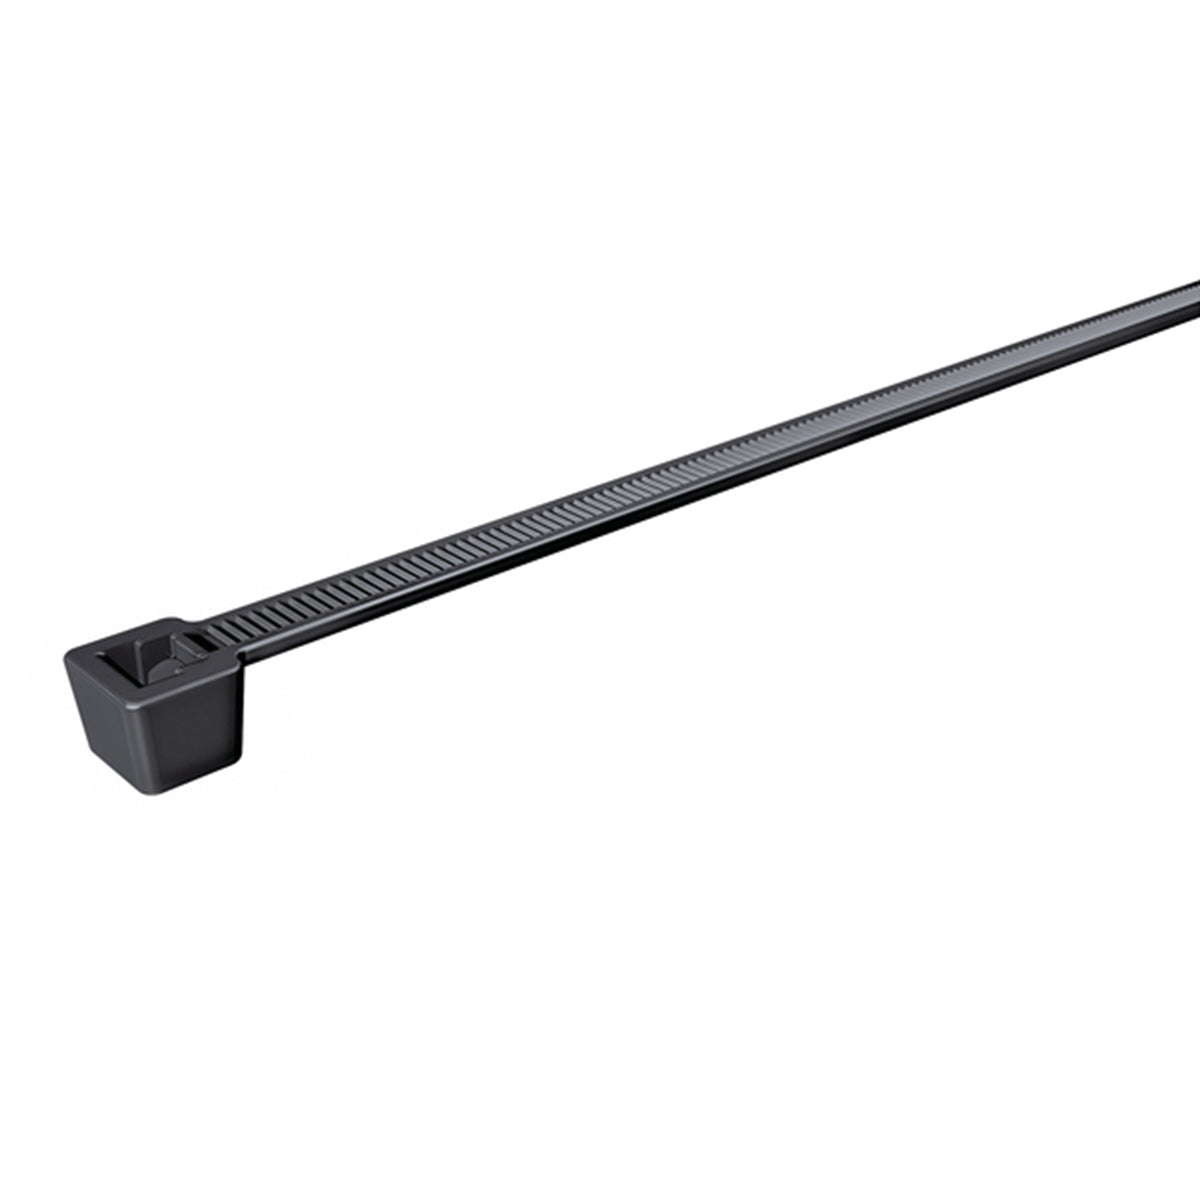 Hellerman Tyton T120RP Cable Ties 7.8mm x 388mm Polypropylene Black (Qty: 100)